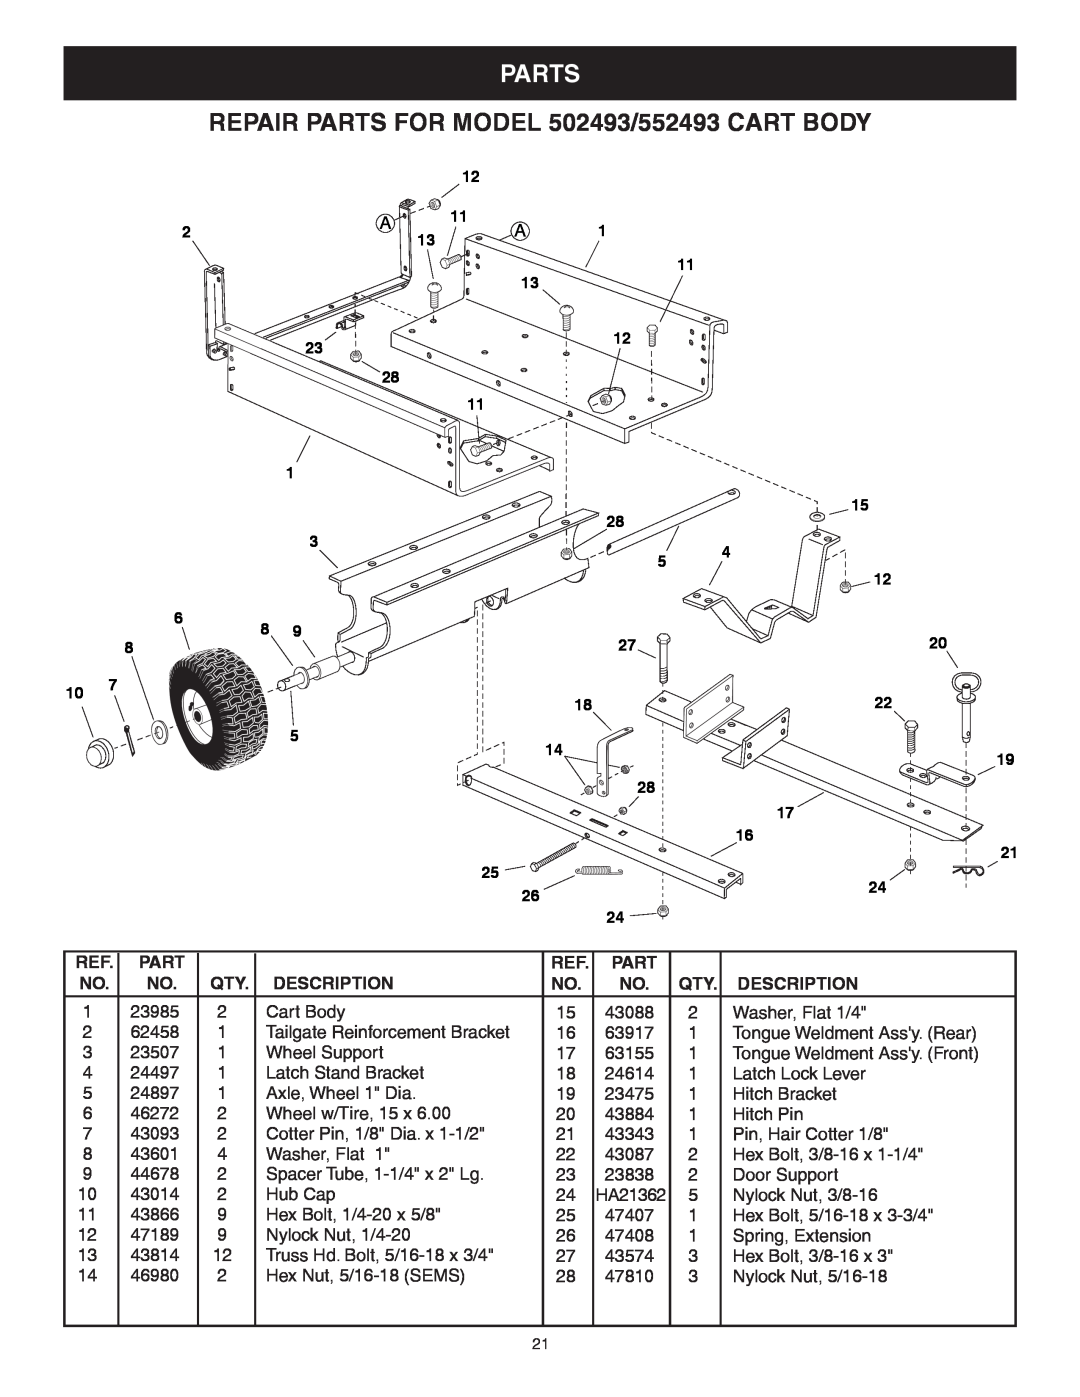 Sears manual Parts, REPAIR PARTS FOR MODEL 502493/552493 CART BODY, Description 